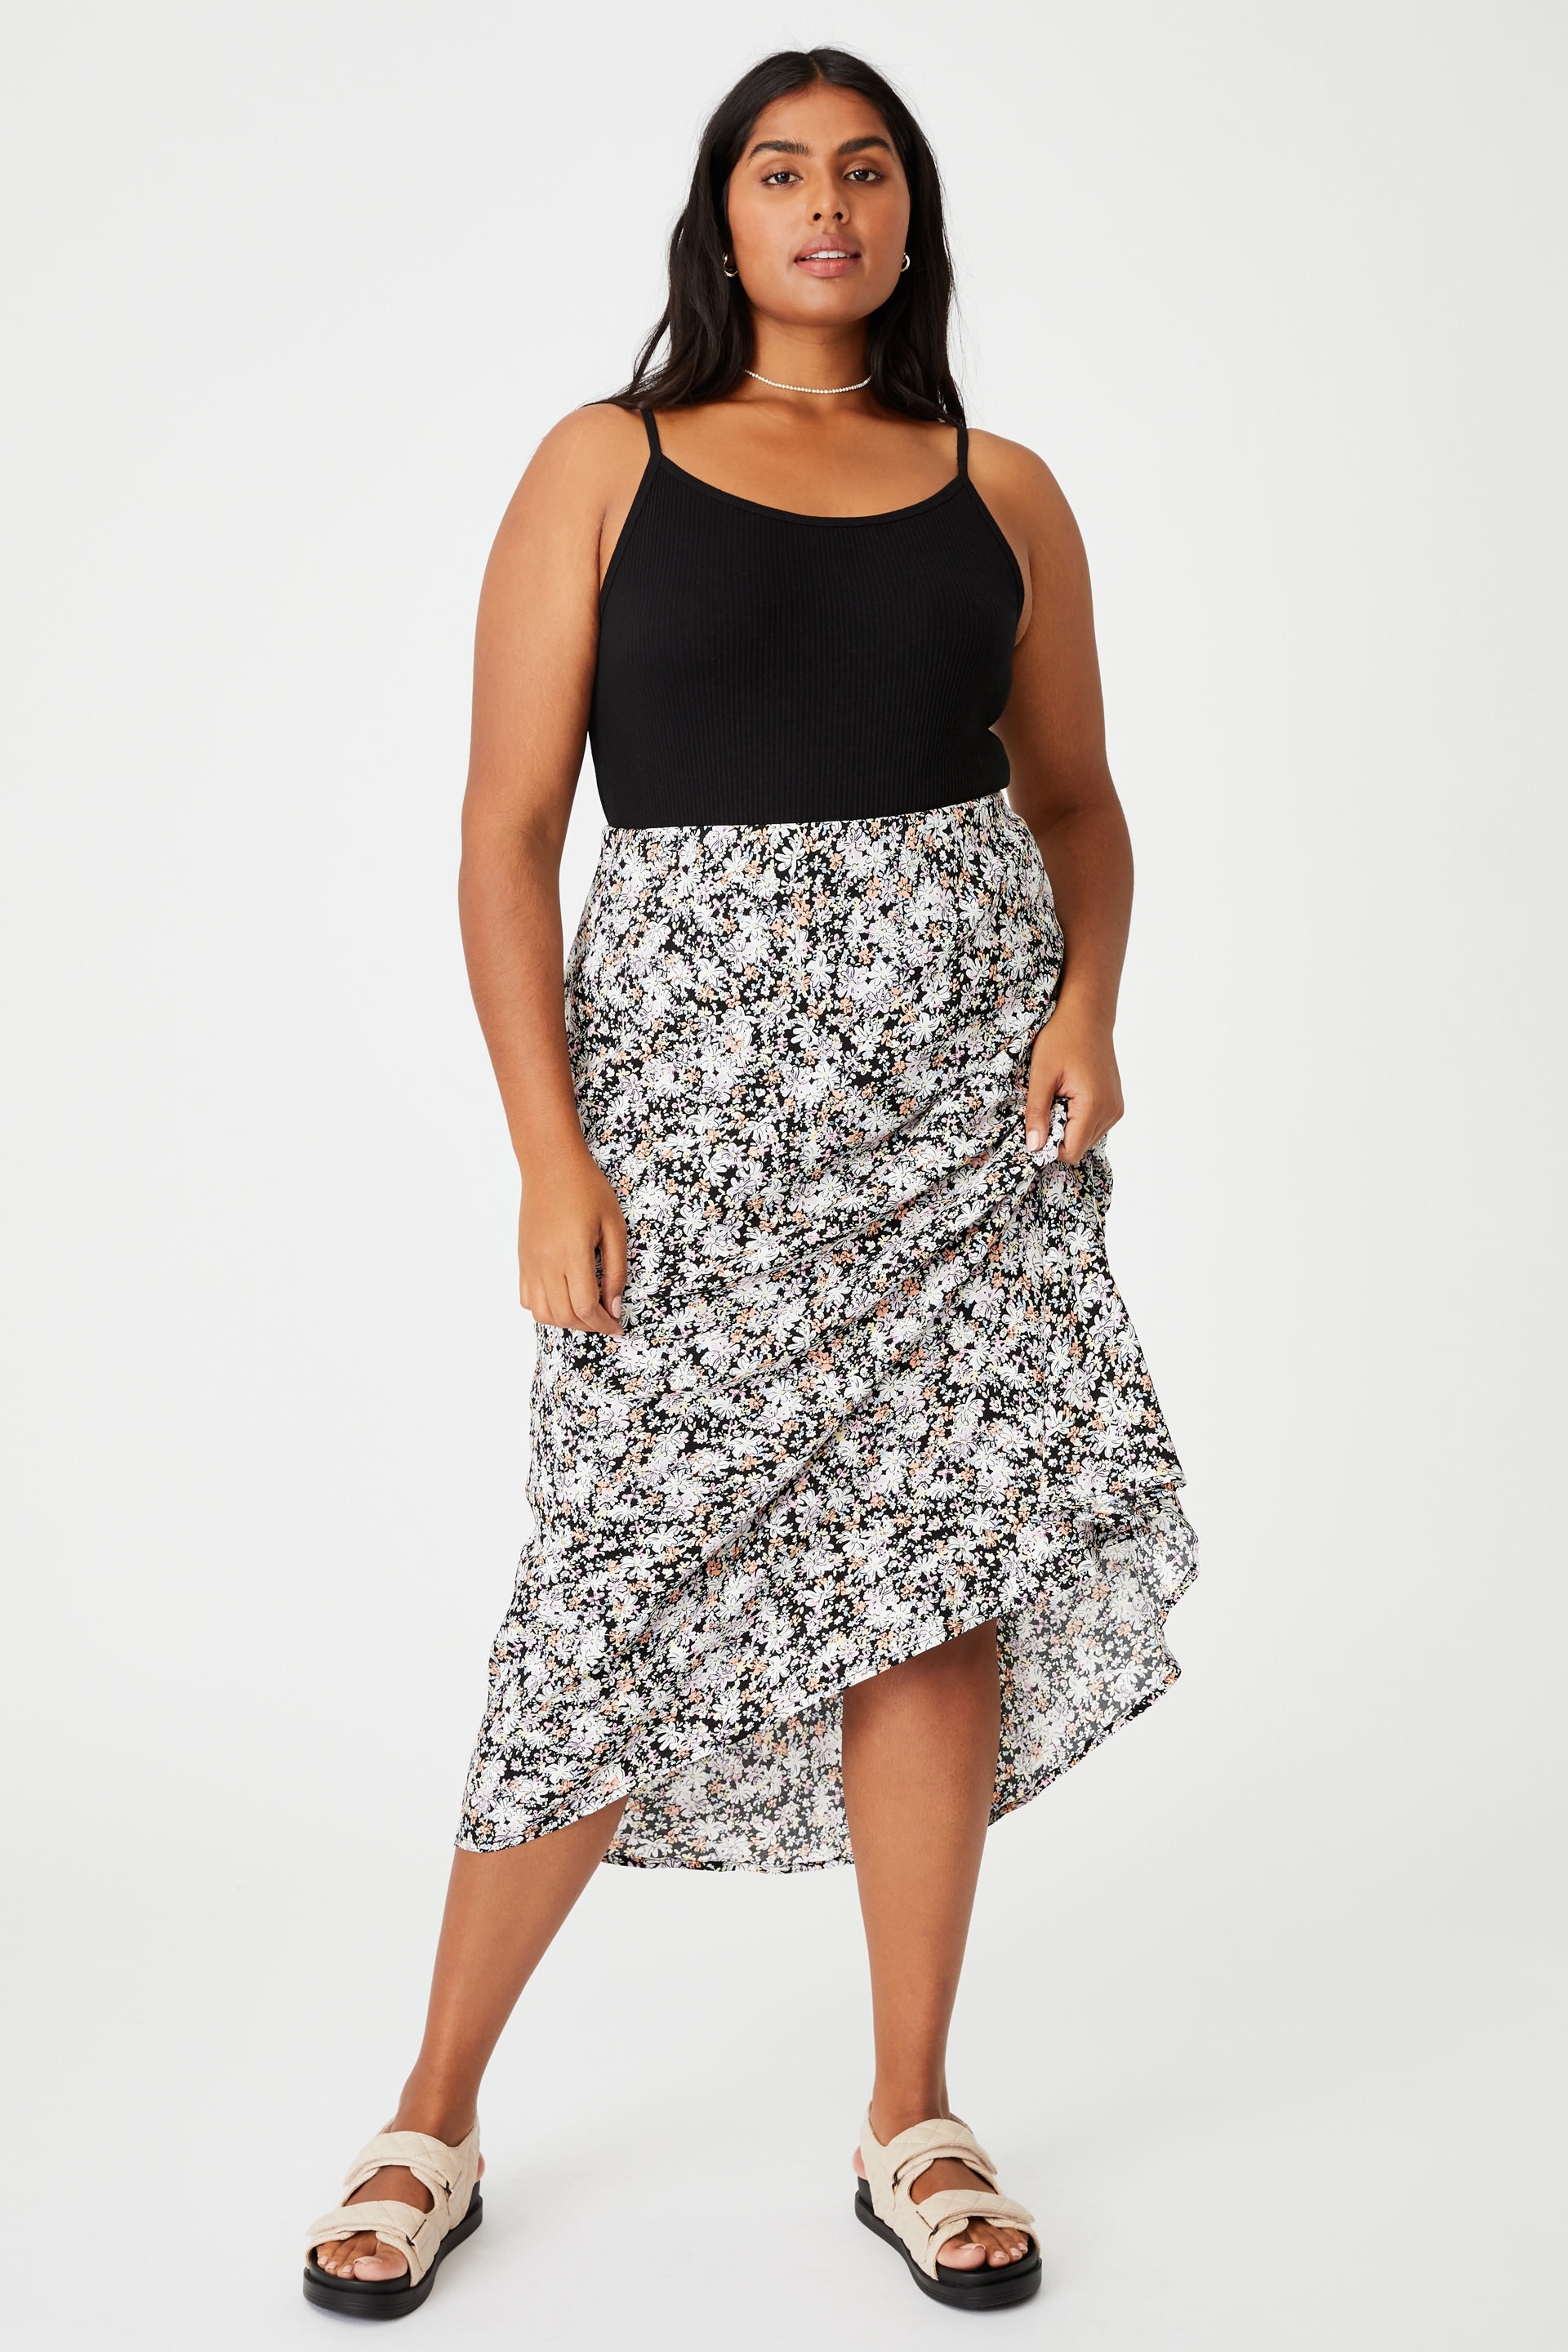 Cotton On Women - Curve All Day Slip Skirt - Diane floral black